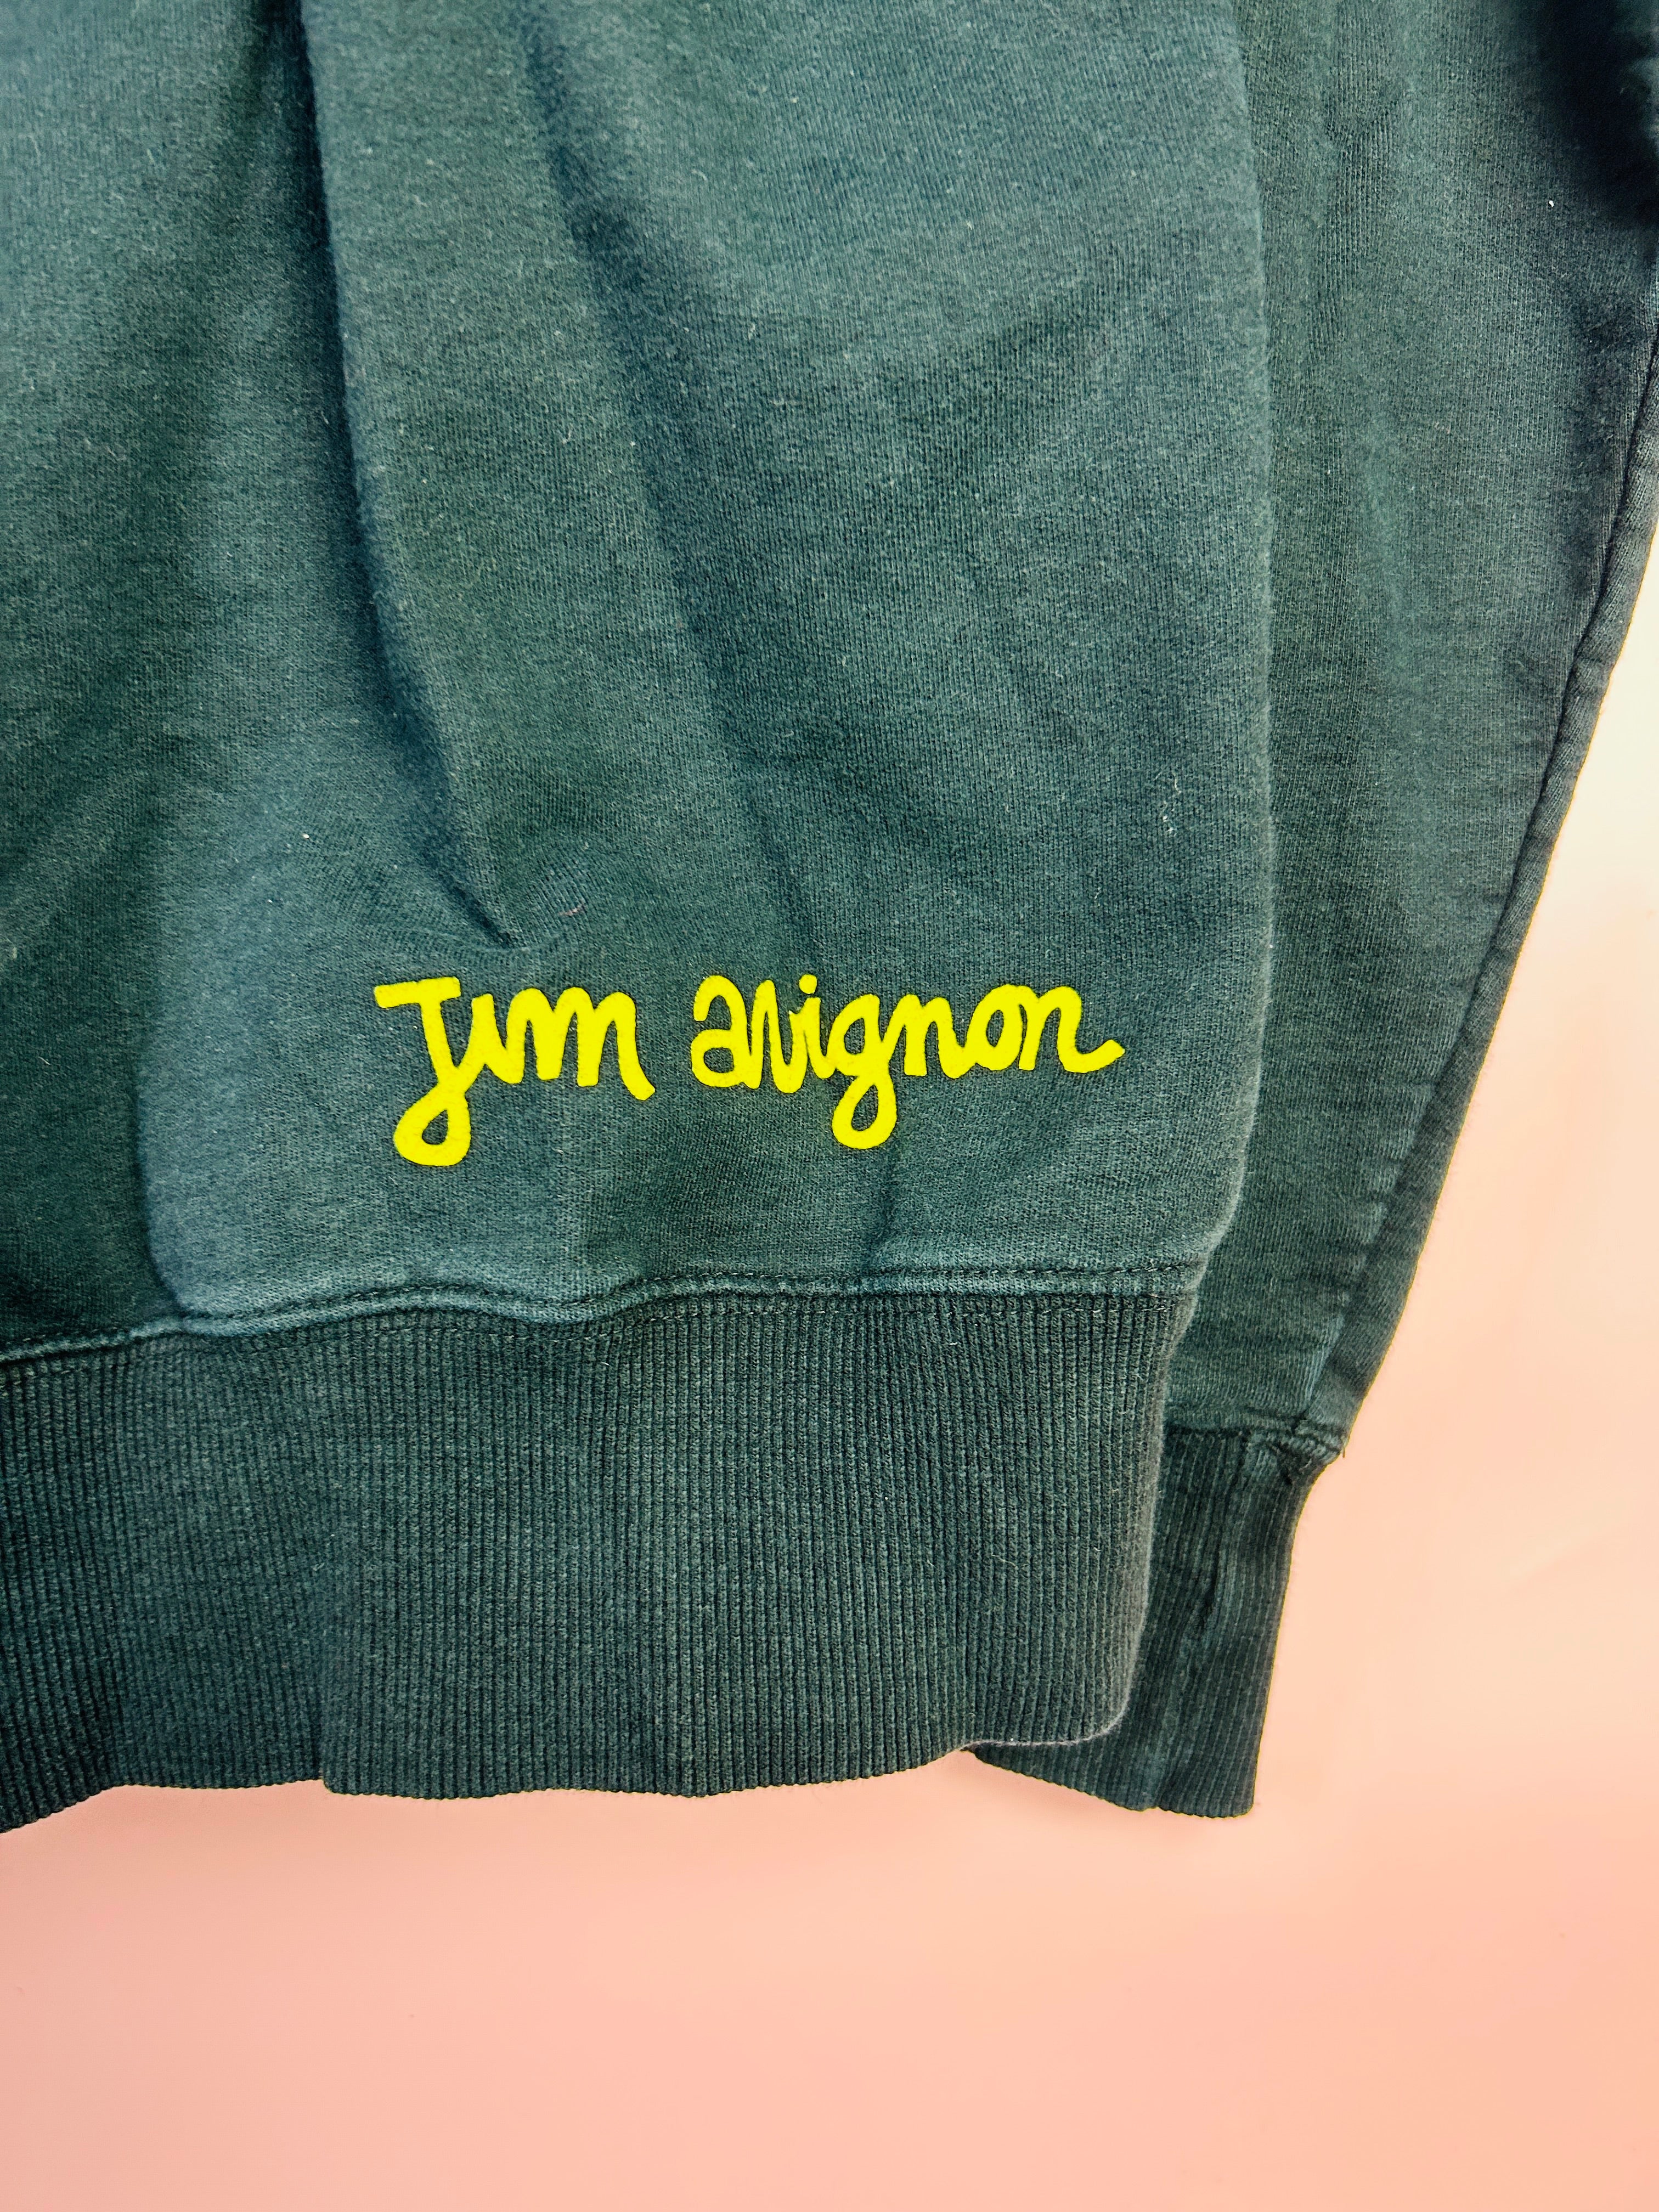 S-M Vintage Jim Avignon Hoodie